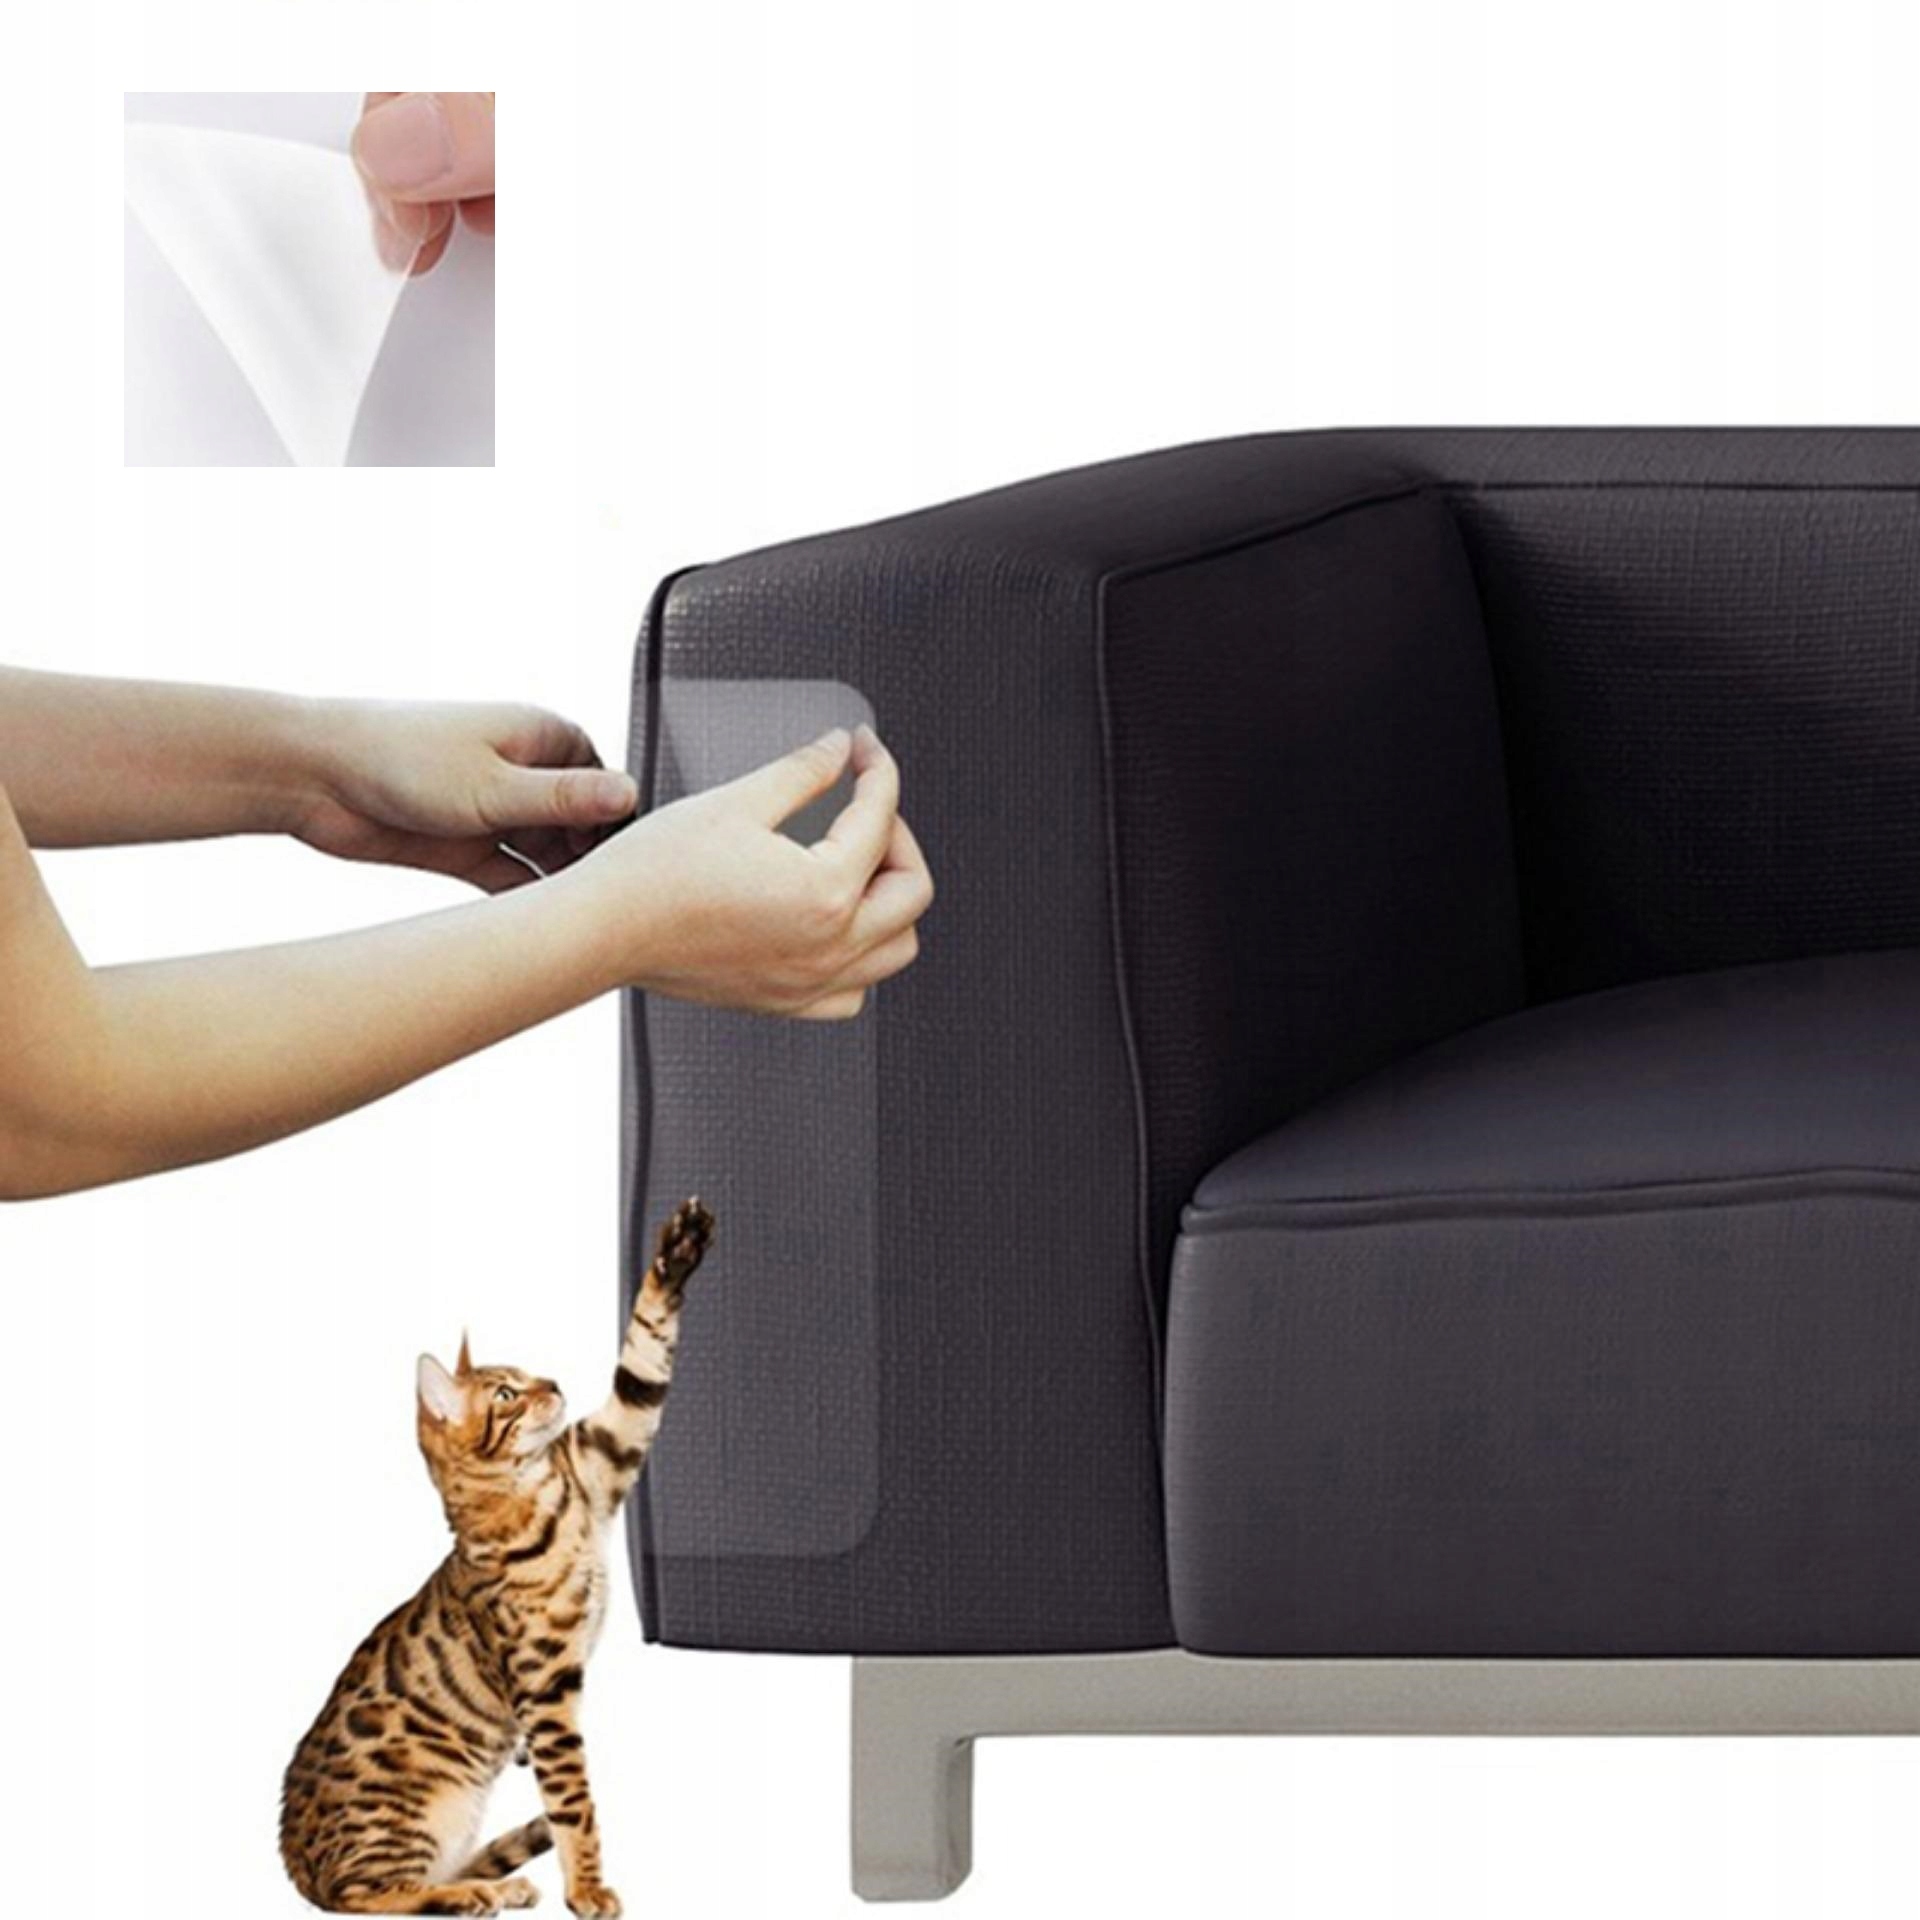 Мебель протектор наклейки Когтеточка для кошки собаки L тип царапин коврик